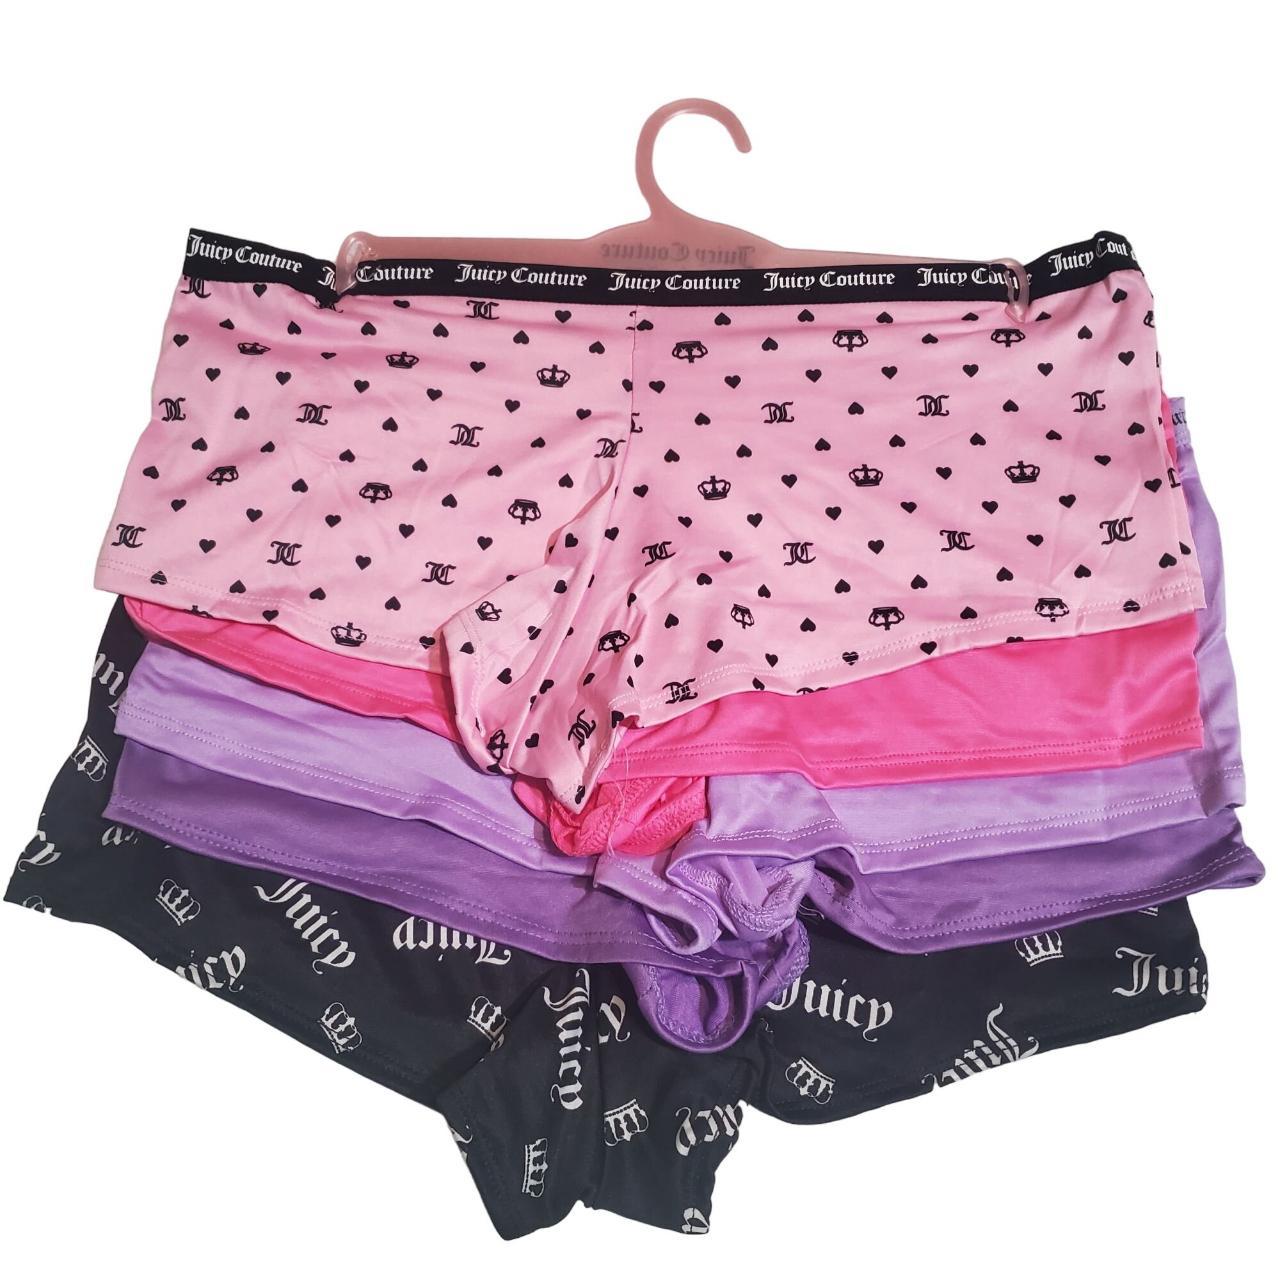 Juicy Couture Intimates Size Medium Boy Shorts Panties 5 Pack Seamless  Comfort